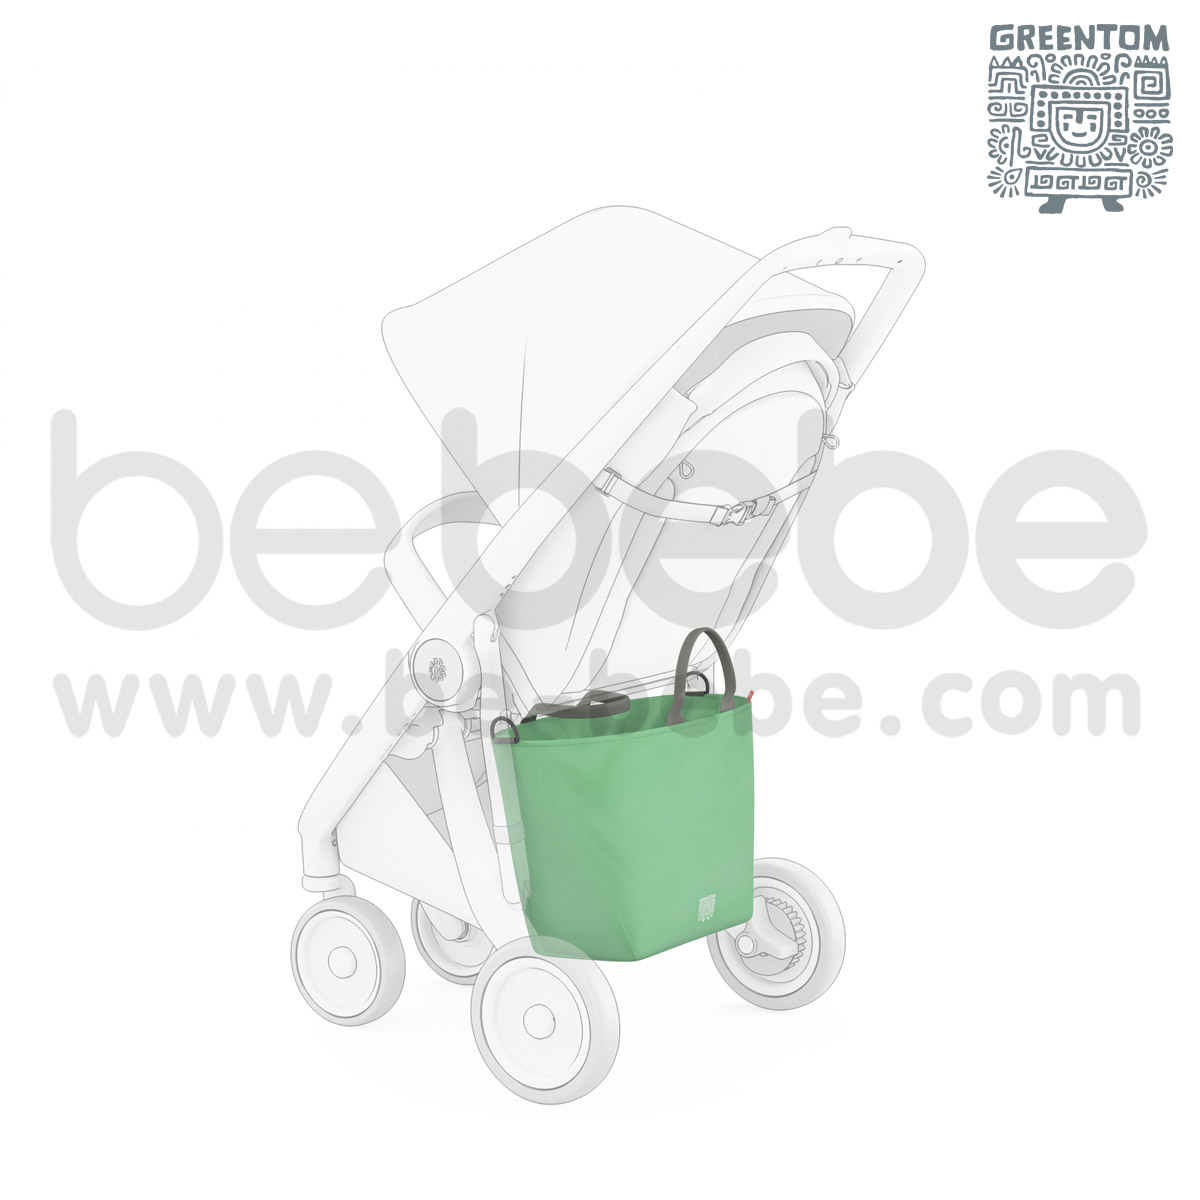 Greentom : กระเป๋า Shopping Bag / น้ำเงิน